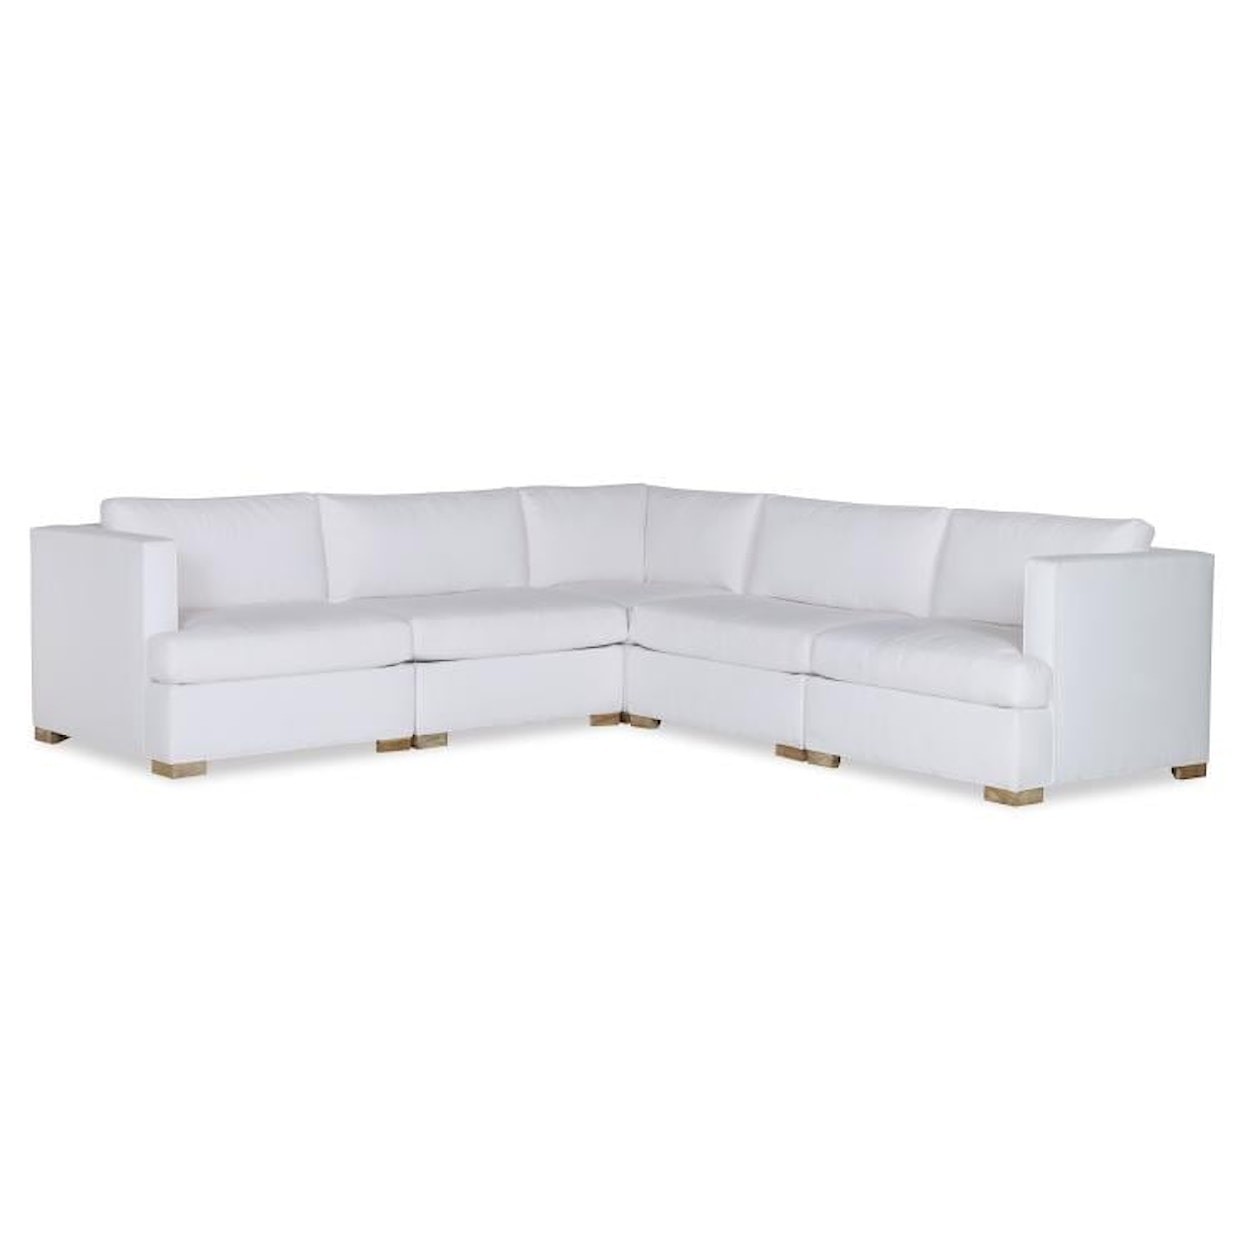 Century Outdoor Upholstery Landon Outdoor Sectional Sofa